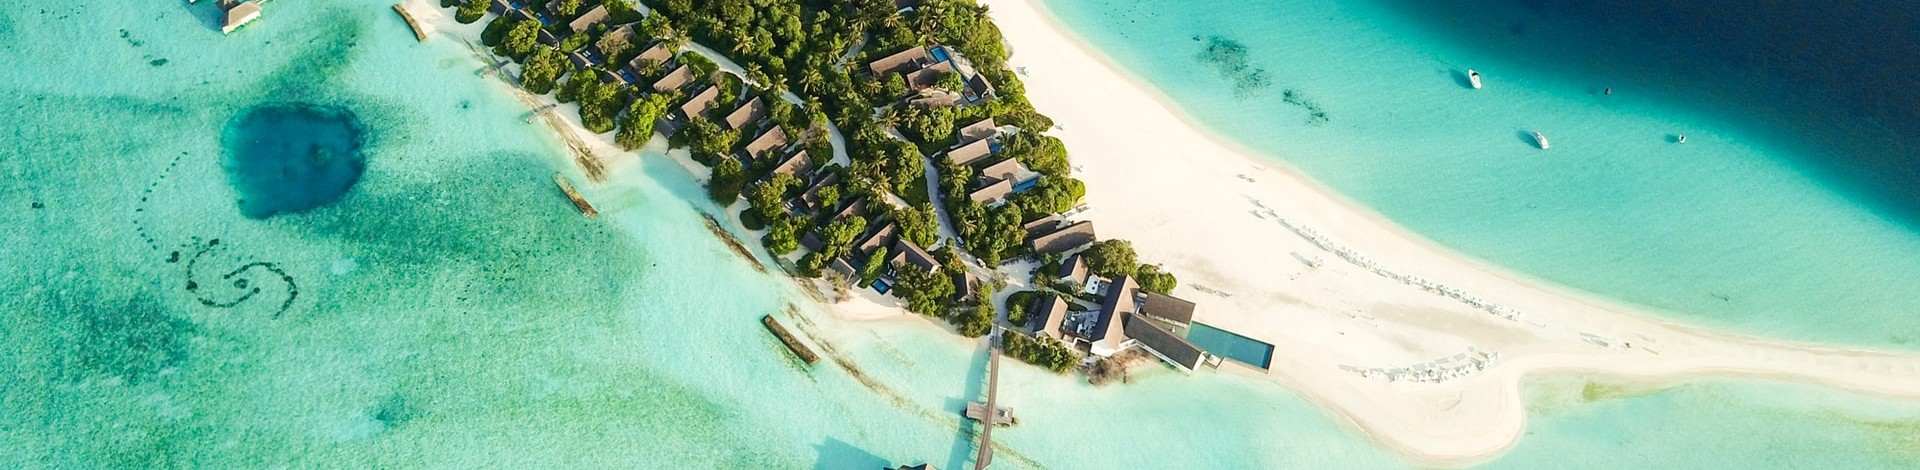 Olhuveli Maldives atoll eau paradisiaque sable fin plage